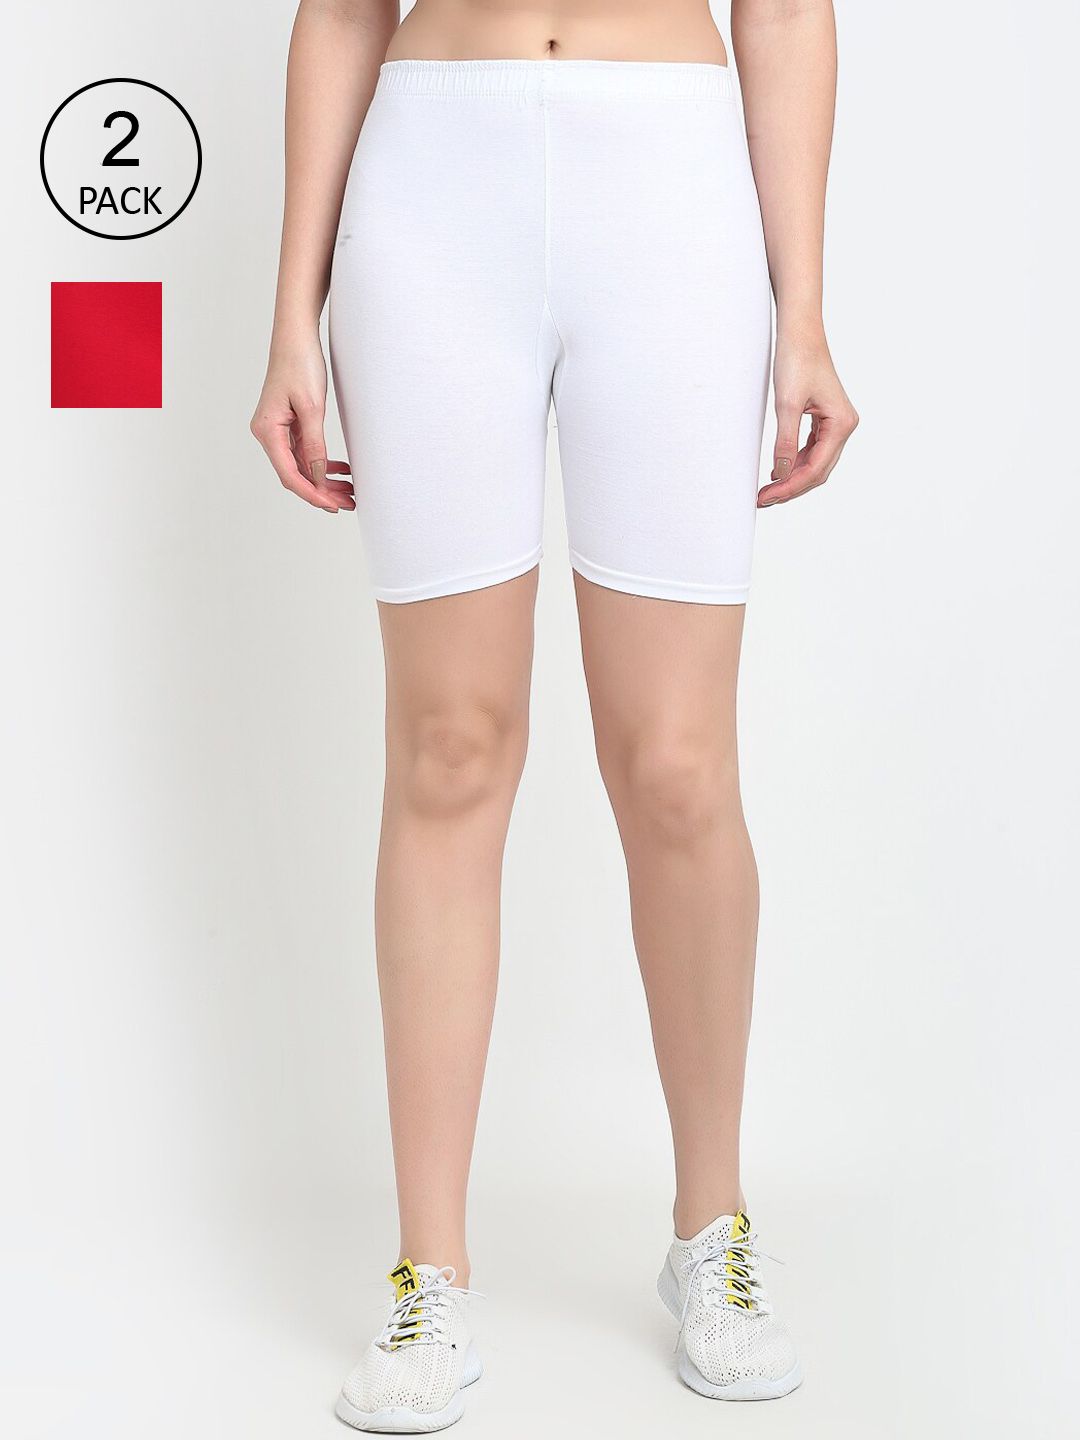 GRACIT Women White & Red Set Of 2 Biker Shorts Price in India